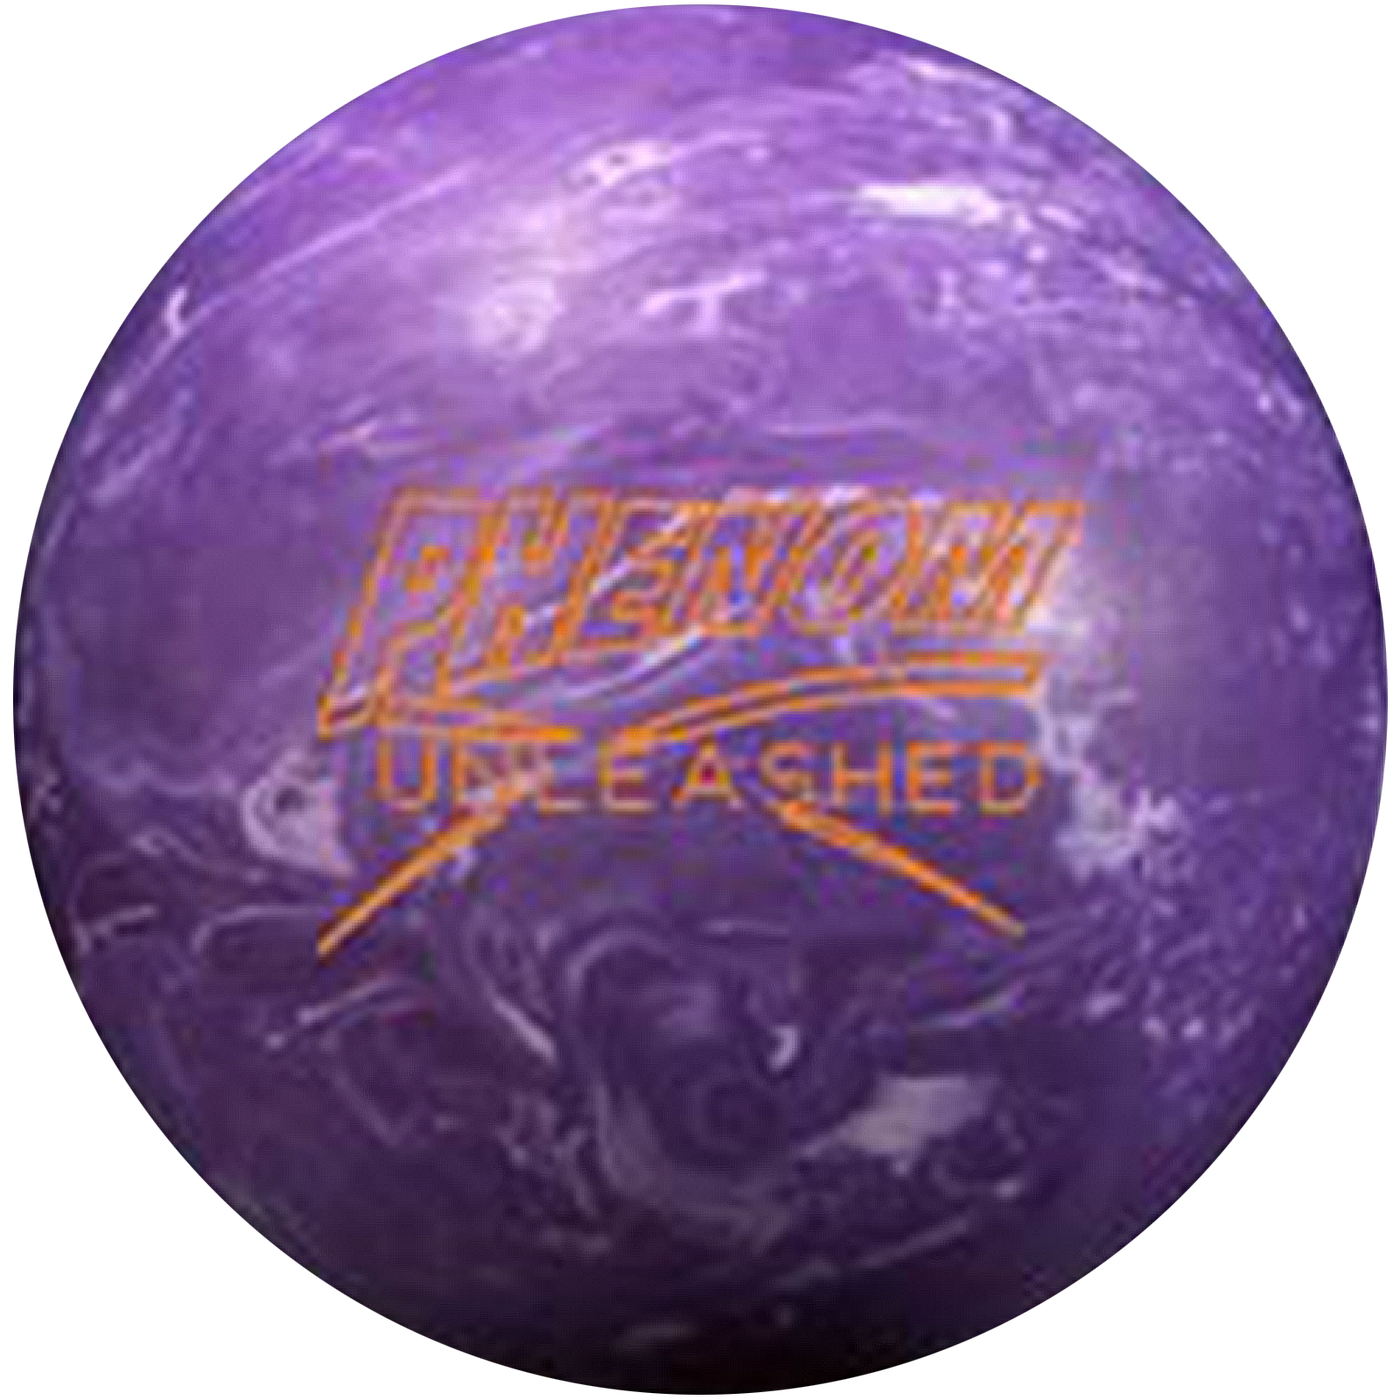 Phenom Unleashed Bowling Ball